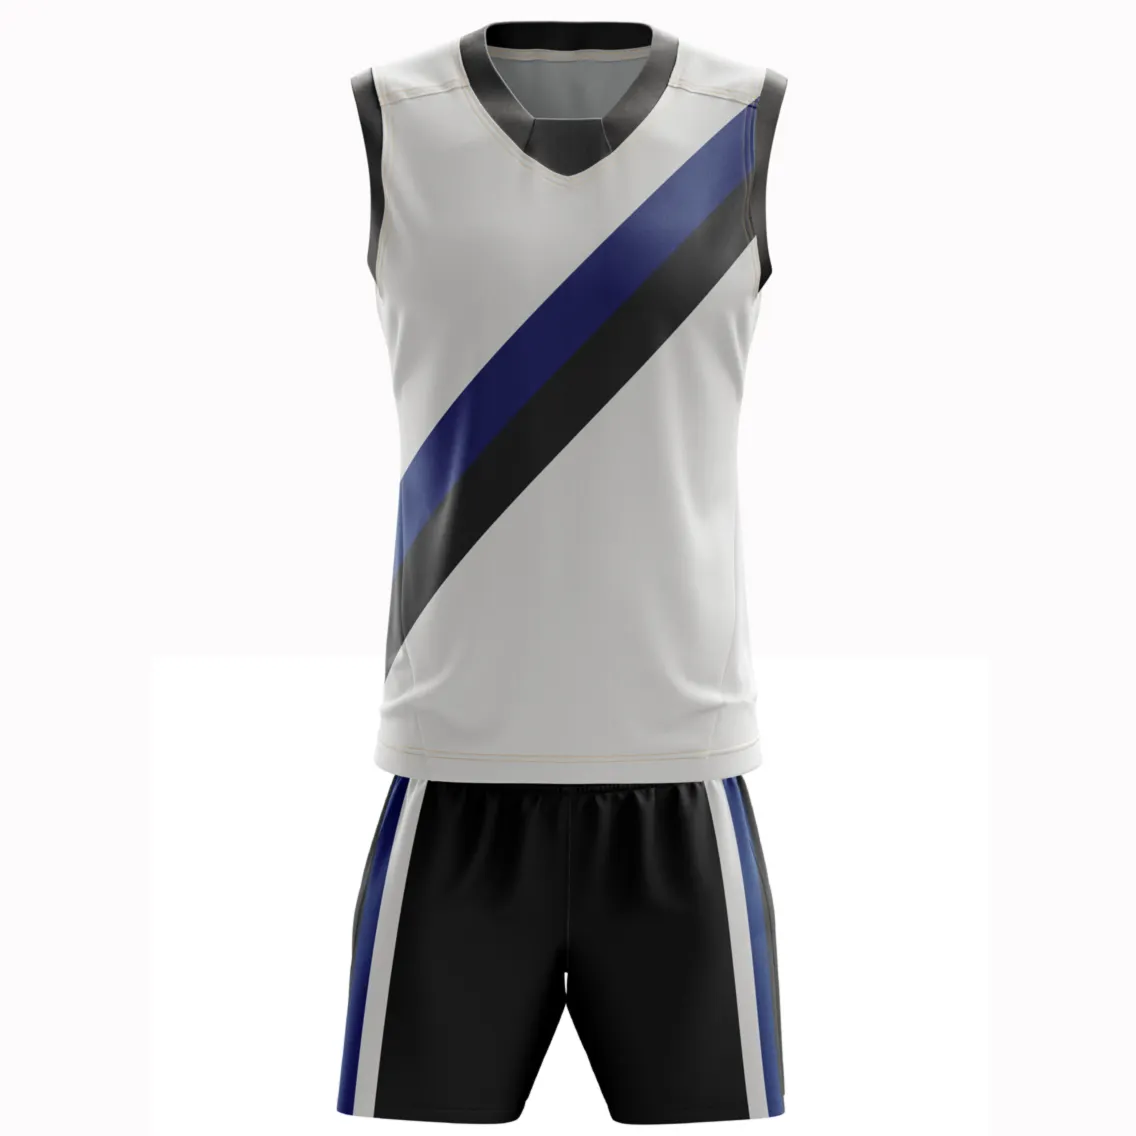 Roupas esportivas subolmadas, mais recente design, venda quente, produto adulto, uniforme de basquete